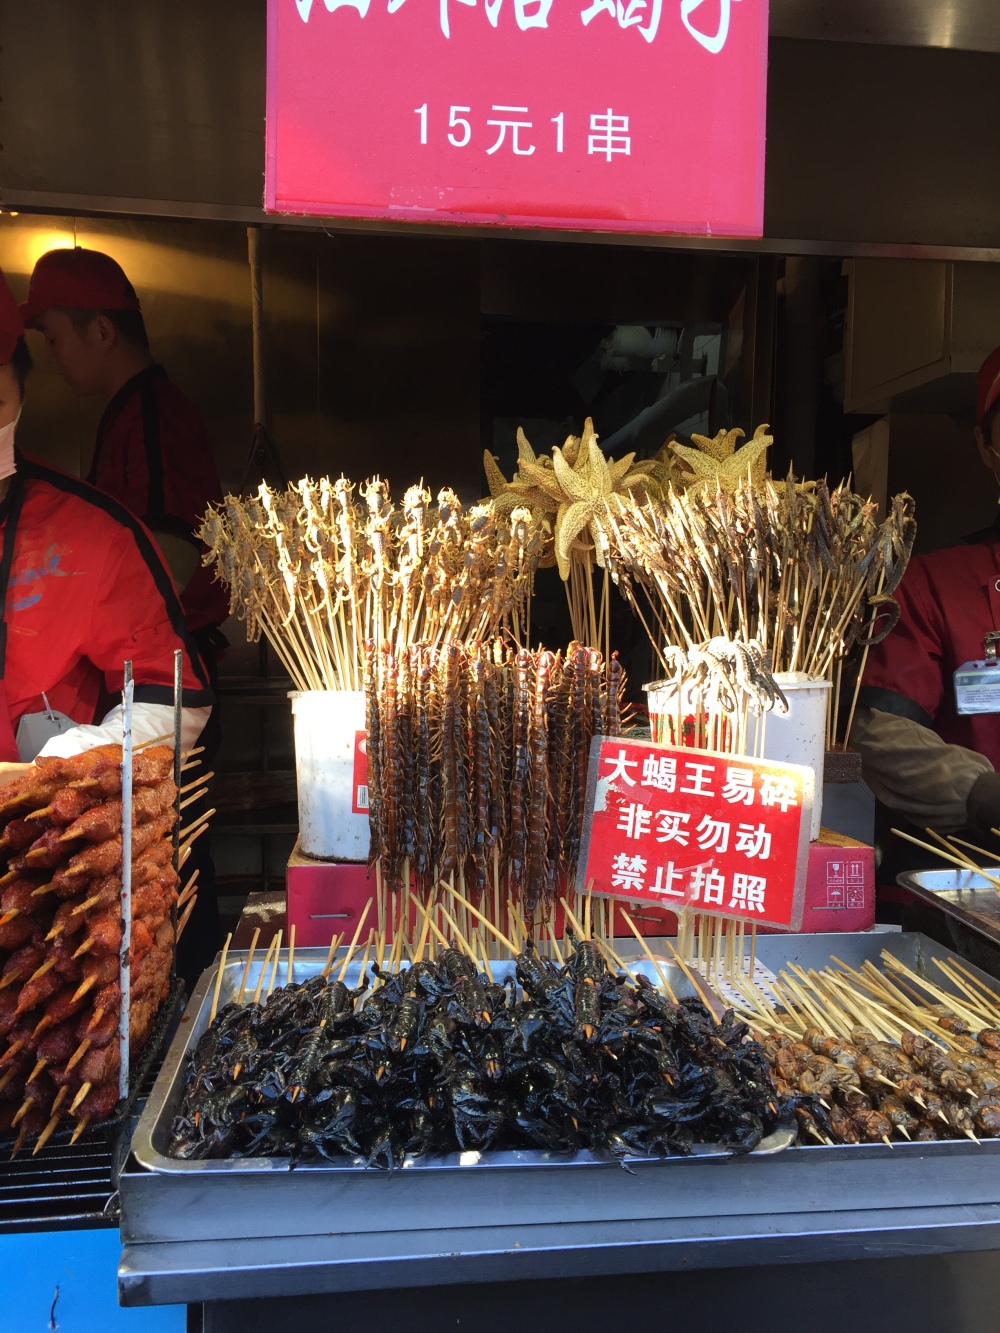 Insetos wangfujing Street comer na china